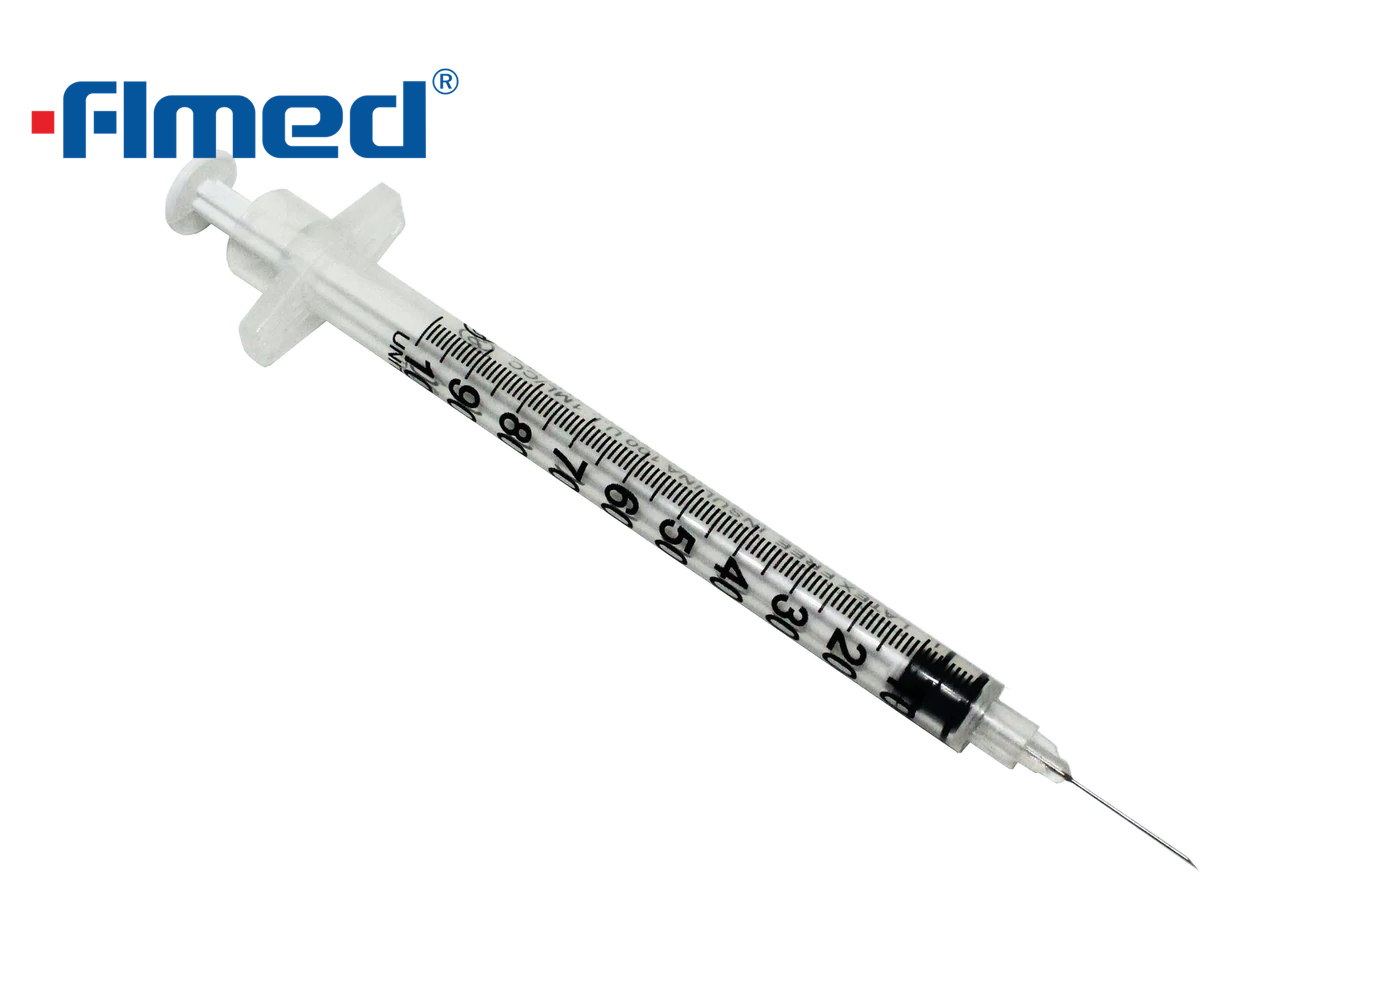 Jeringa y aguja de insulina de 1 ml desechables 12.7 mm x 29g